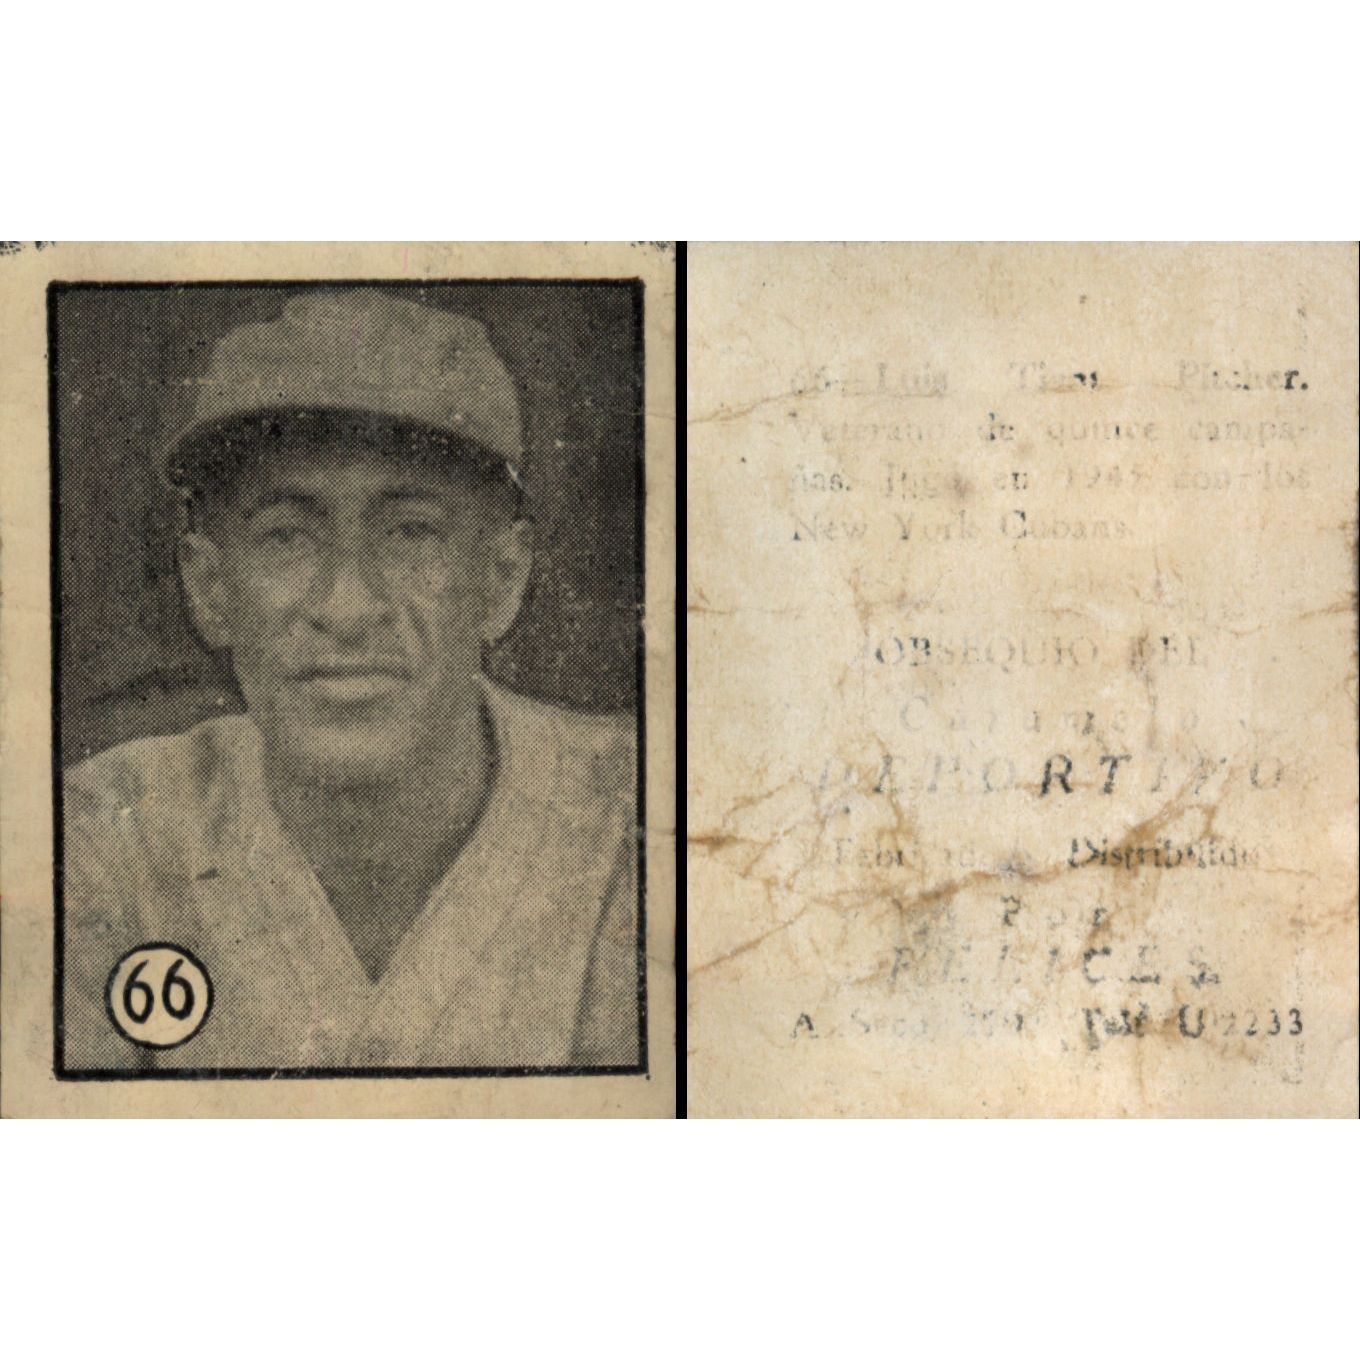 Luis Tiant Sr. Baseball Card No. 66 - Cuba.